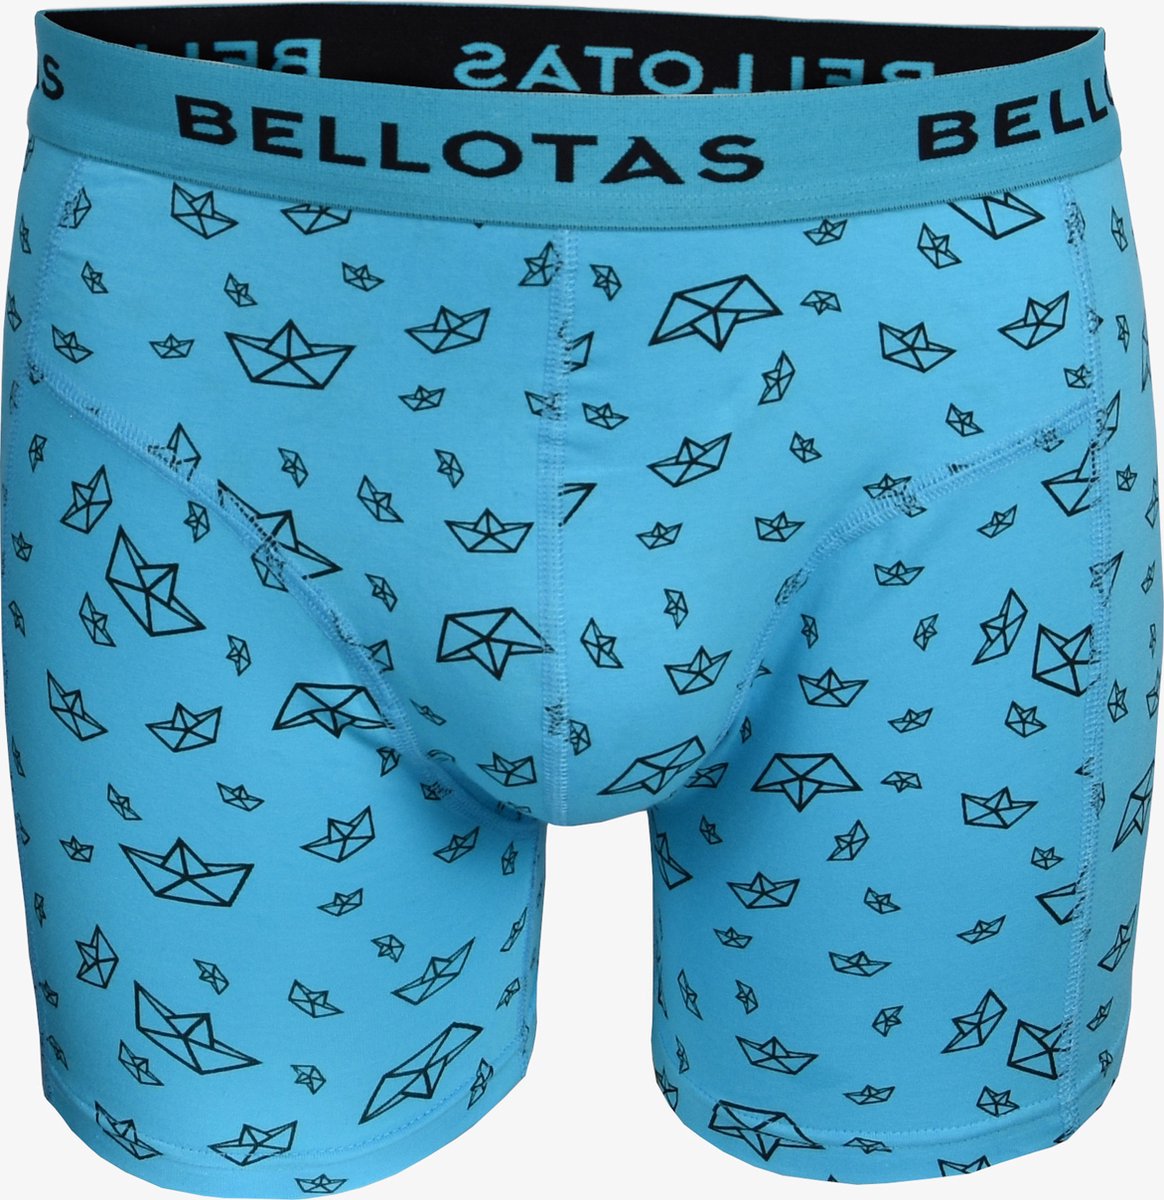 Bellotas - Boxershort - Aster XXL